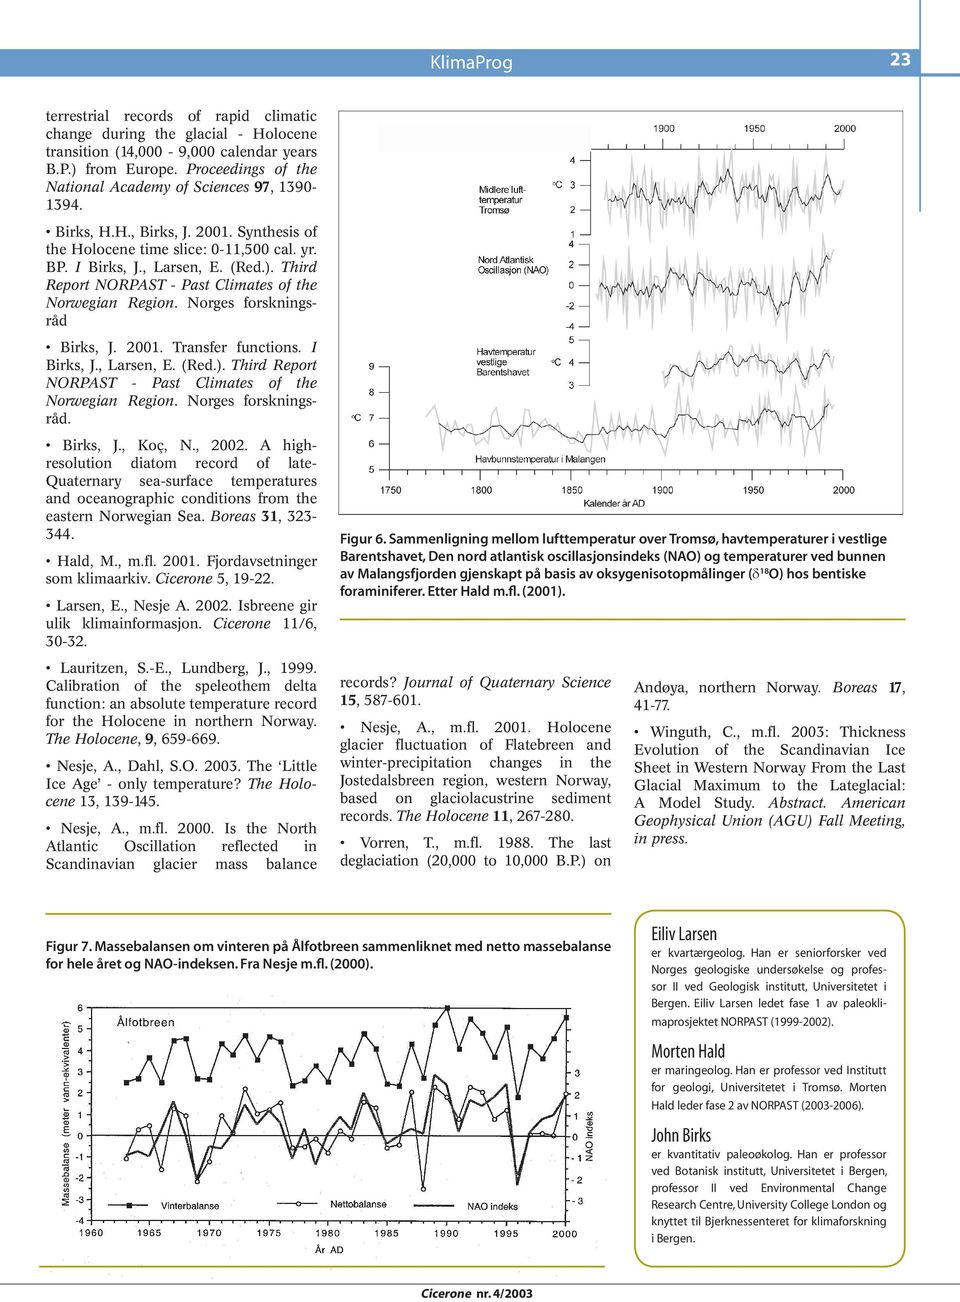 Third Report NORPAST - Past Climates of the Norwegian Region. Norges forskningsråd Birks, J. 2001. Transfer functions. I Birks, J., Larsen, E. (Red.).